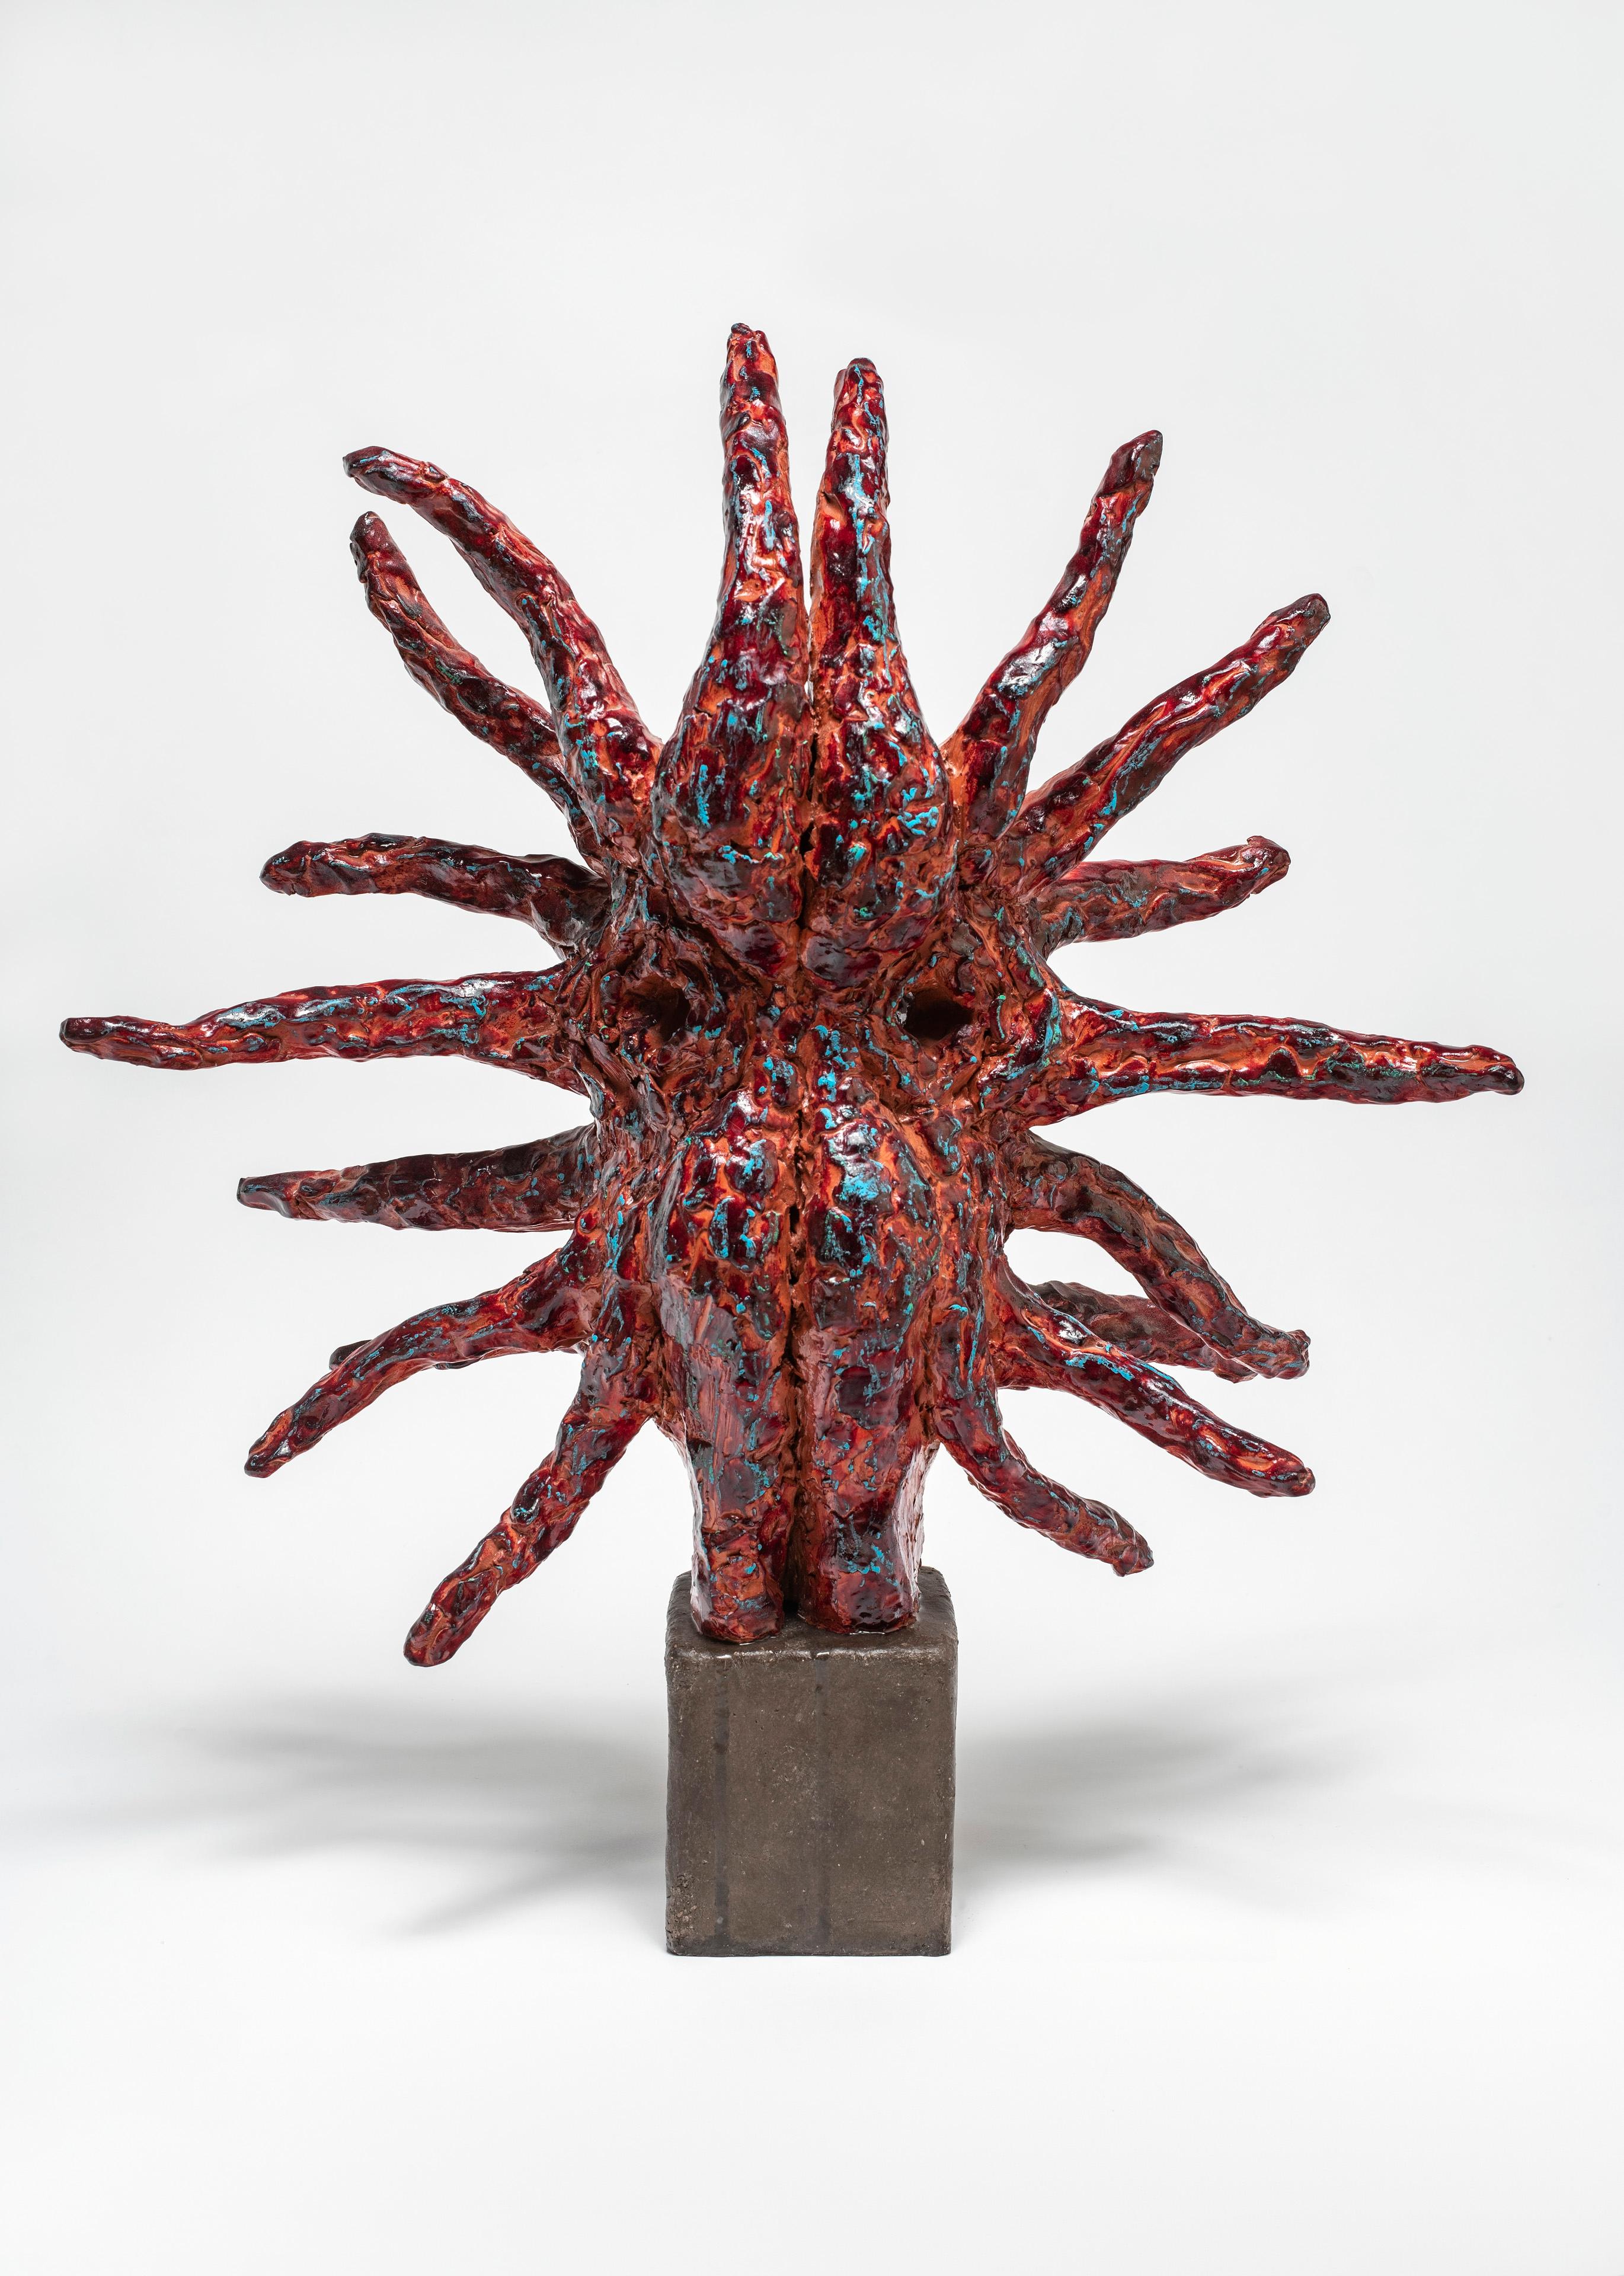 Red vision Nicolas Kennett 21st Century art contemporary terracotta sculpture 